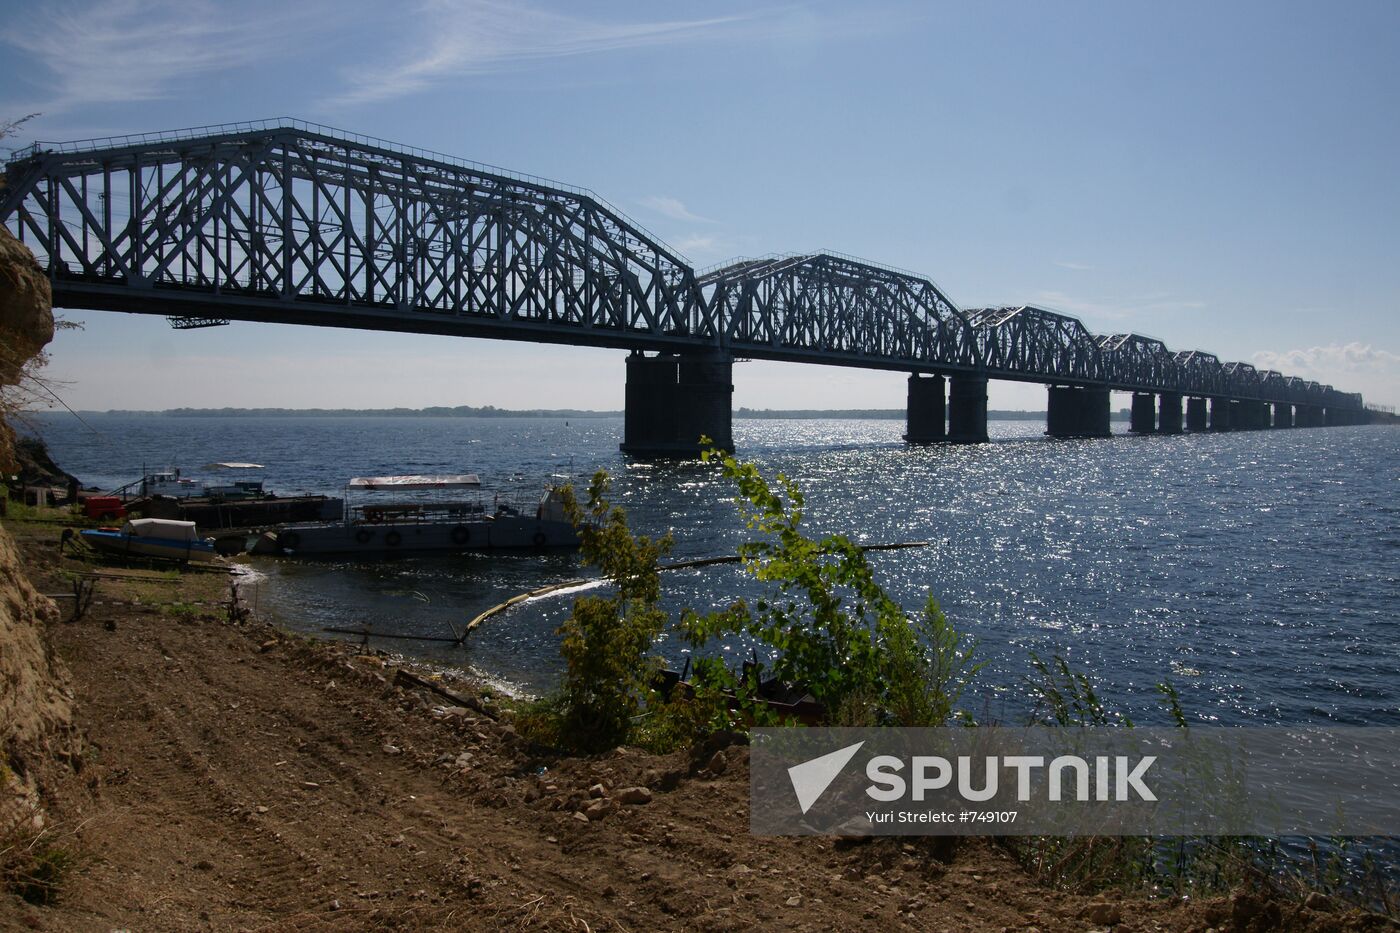 Alexandrovsky railway bridge across the Volga